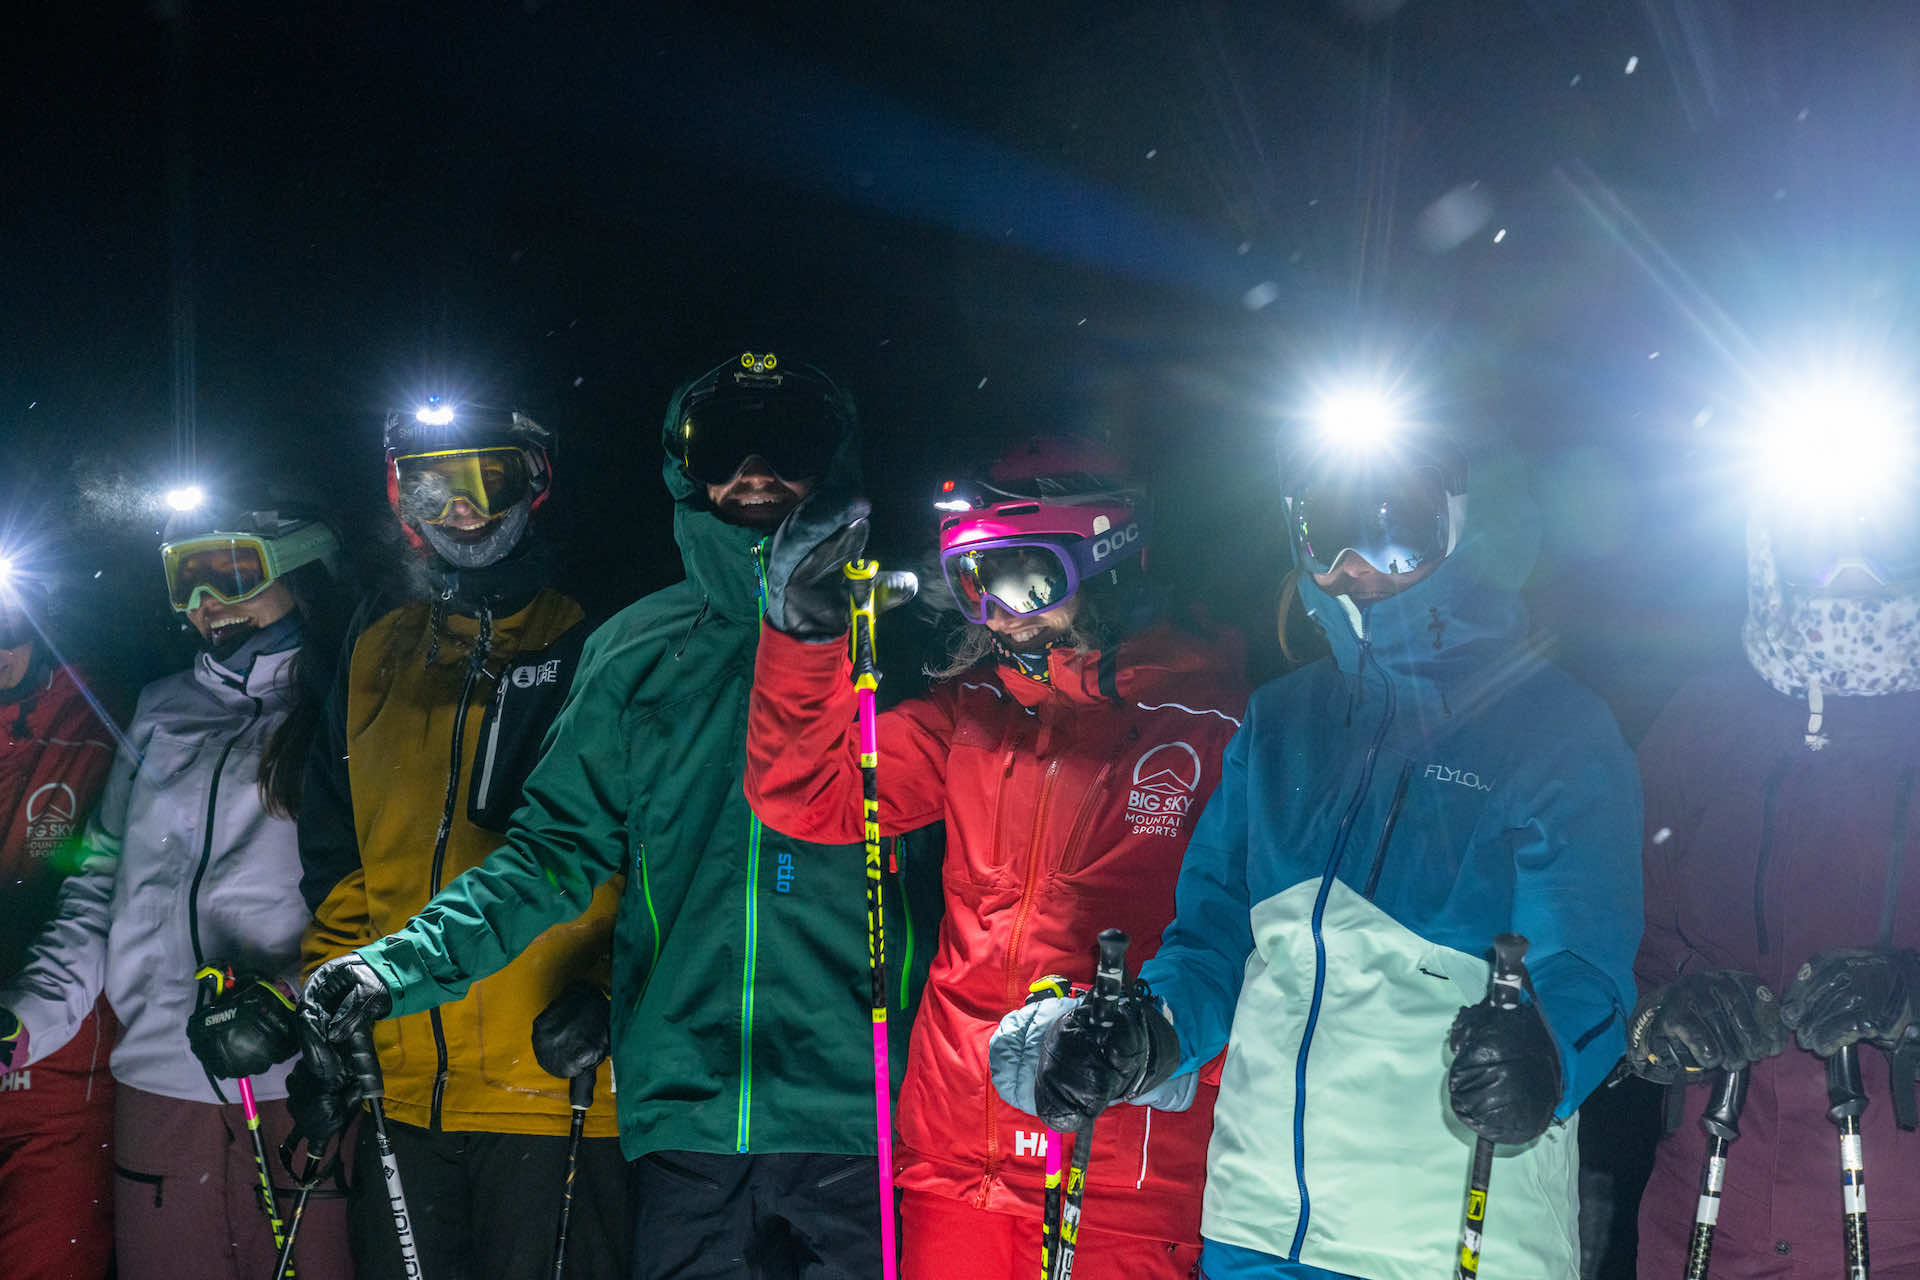 Headlamp Night Skiing Group